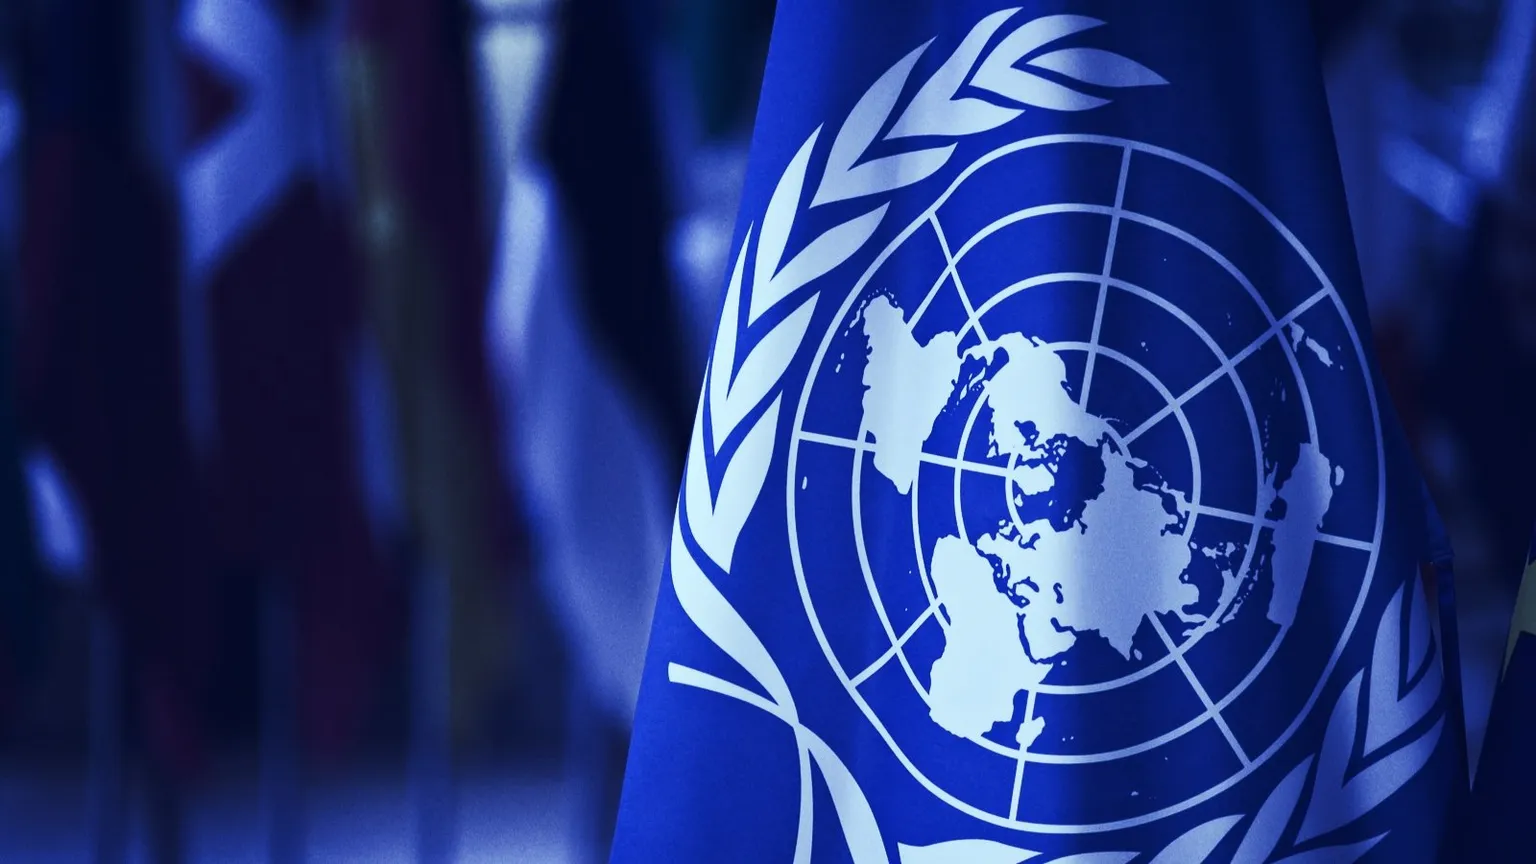 The UN flag. Image: Shutterstock